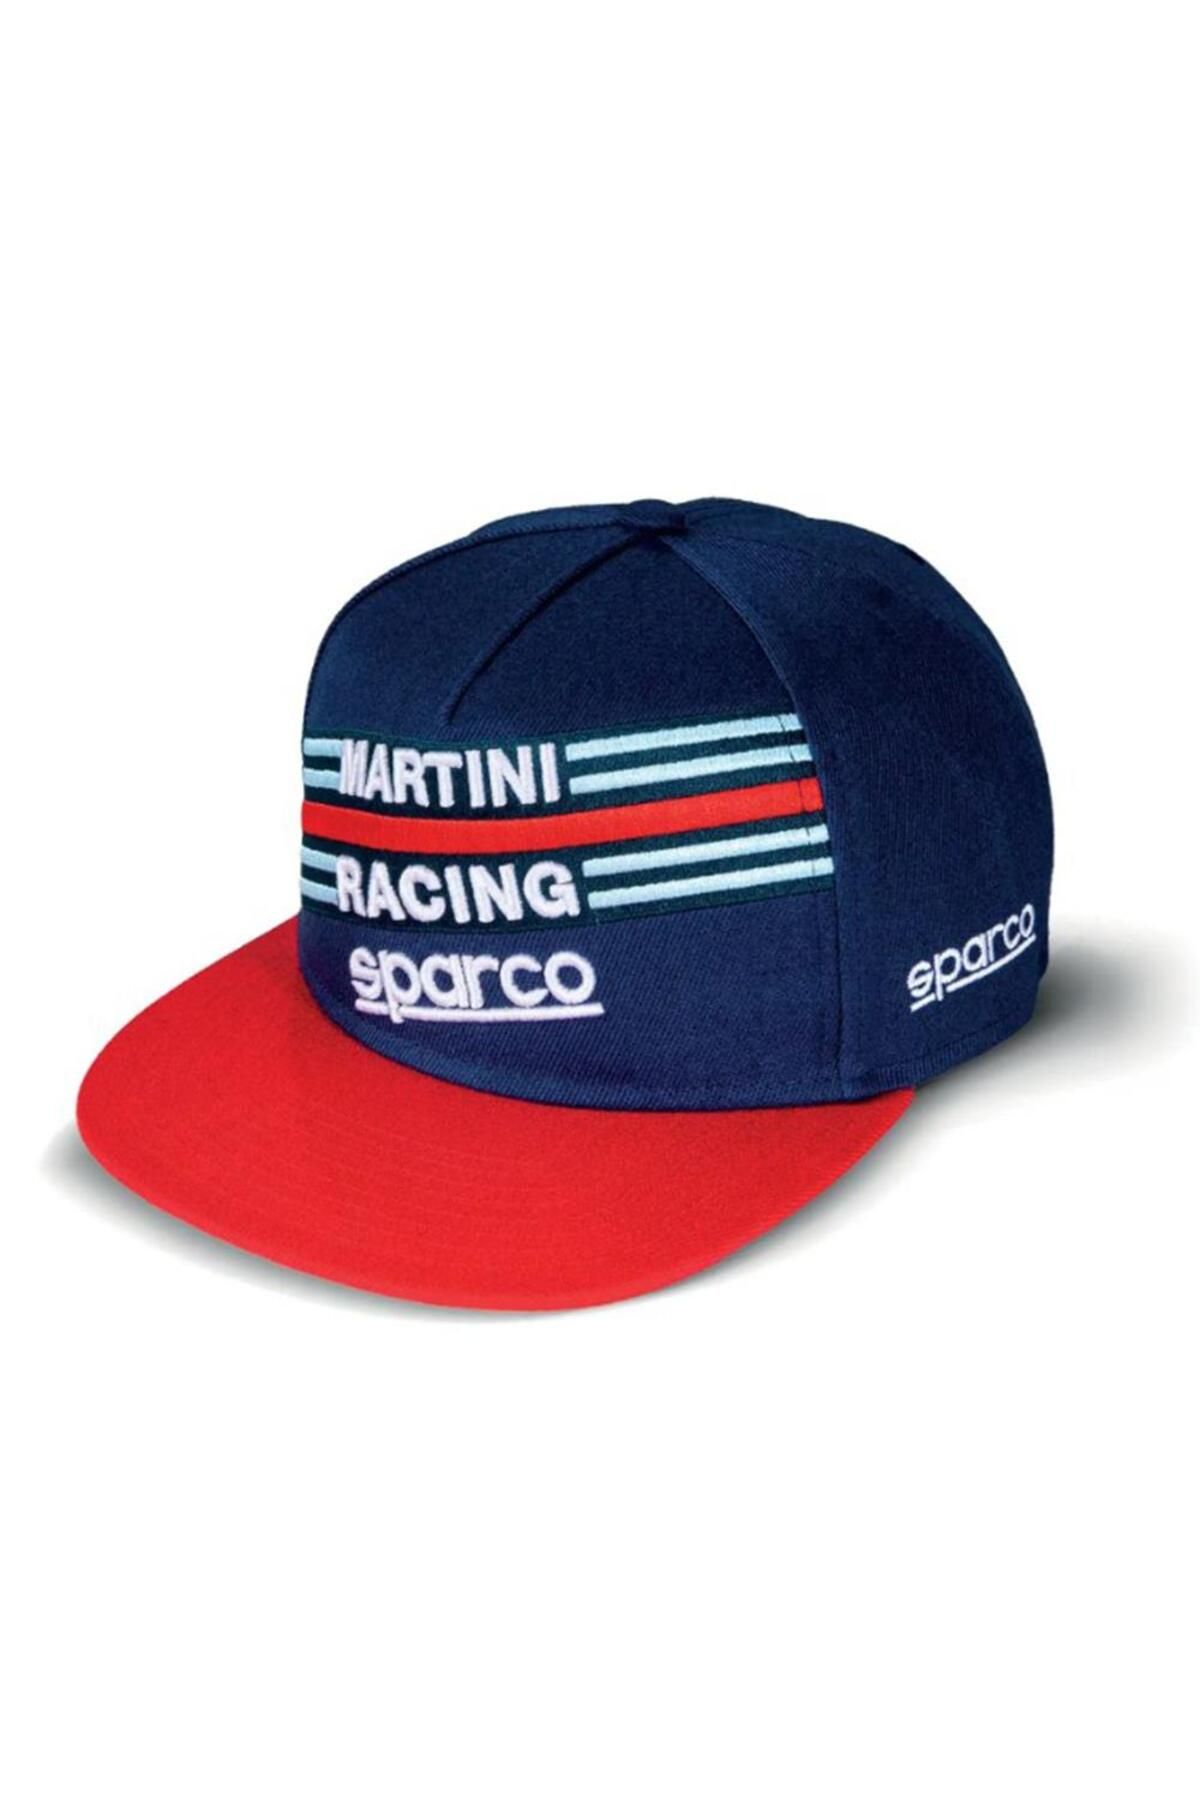 Sparco Martini Racing Lacivert Şapka